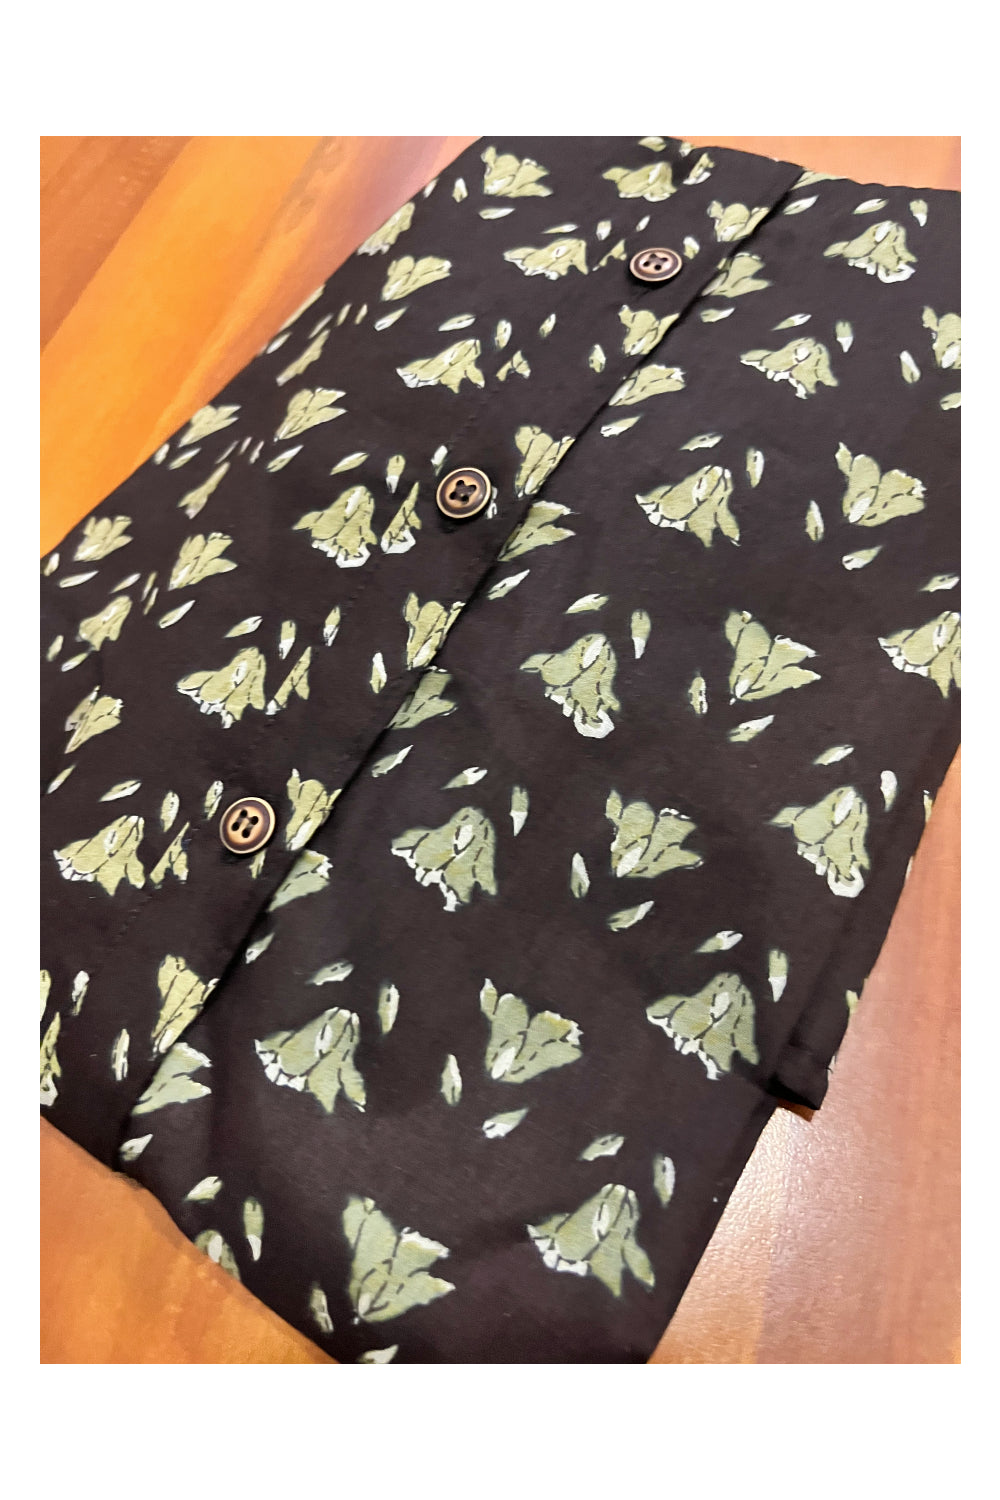 Southloom Jaipur Cotton Black Hand Block Printed Mandarin Collar Shirt (Full Sleeves)